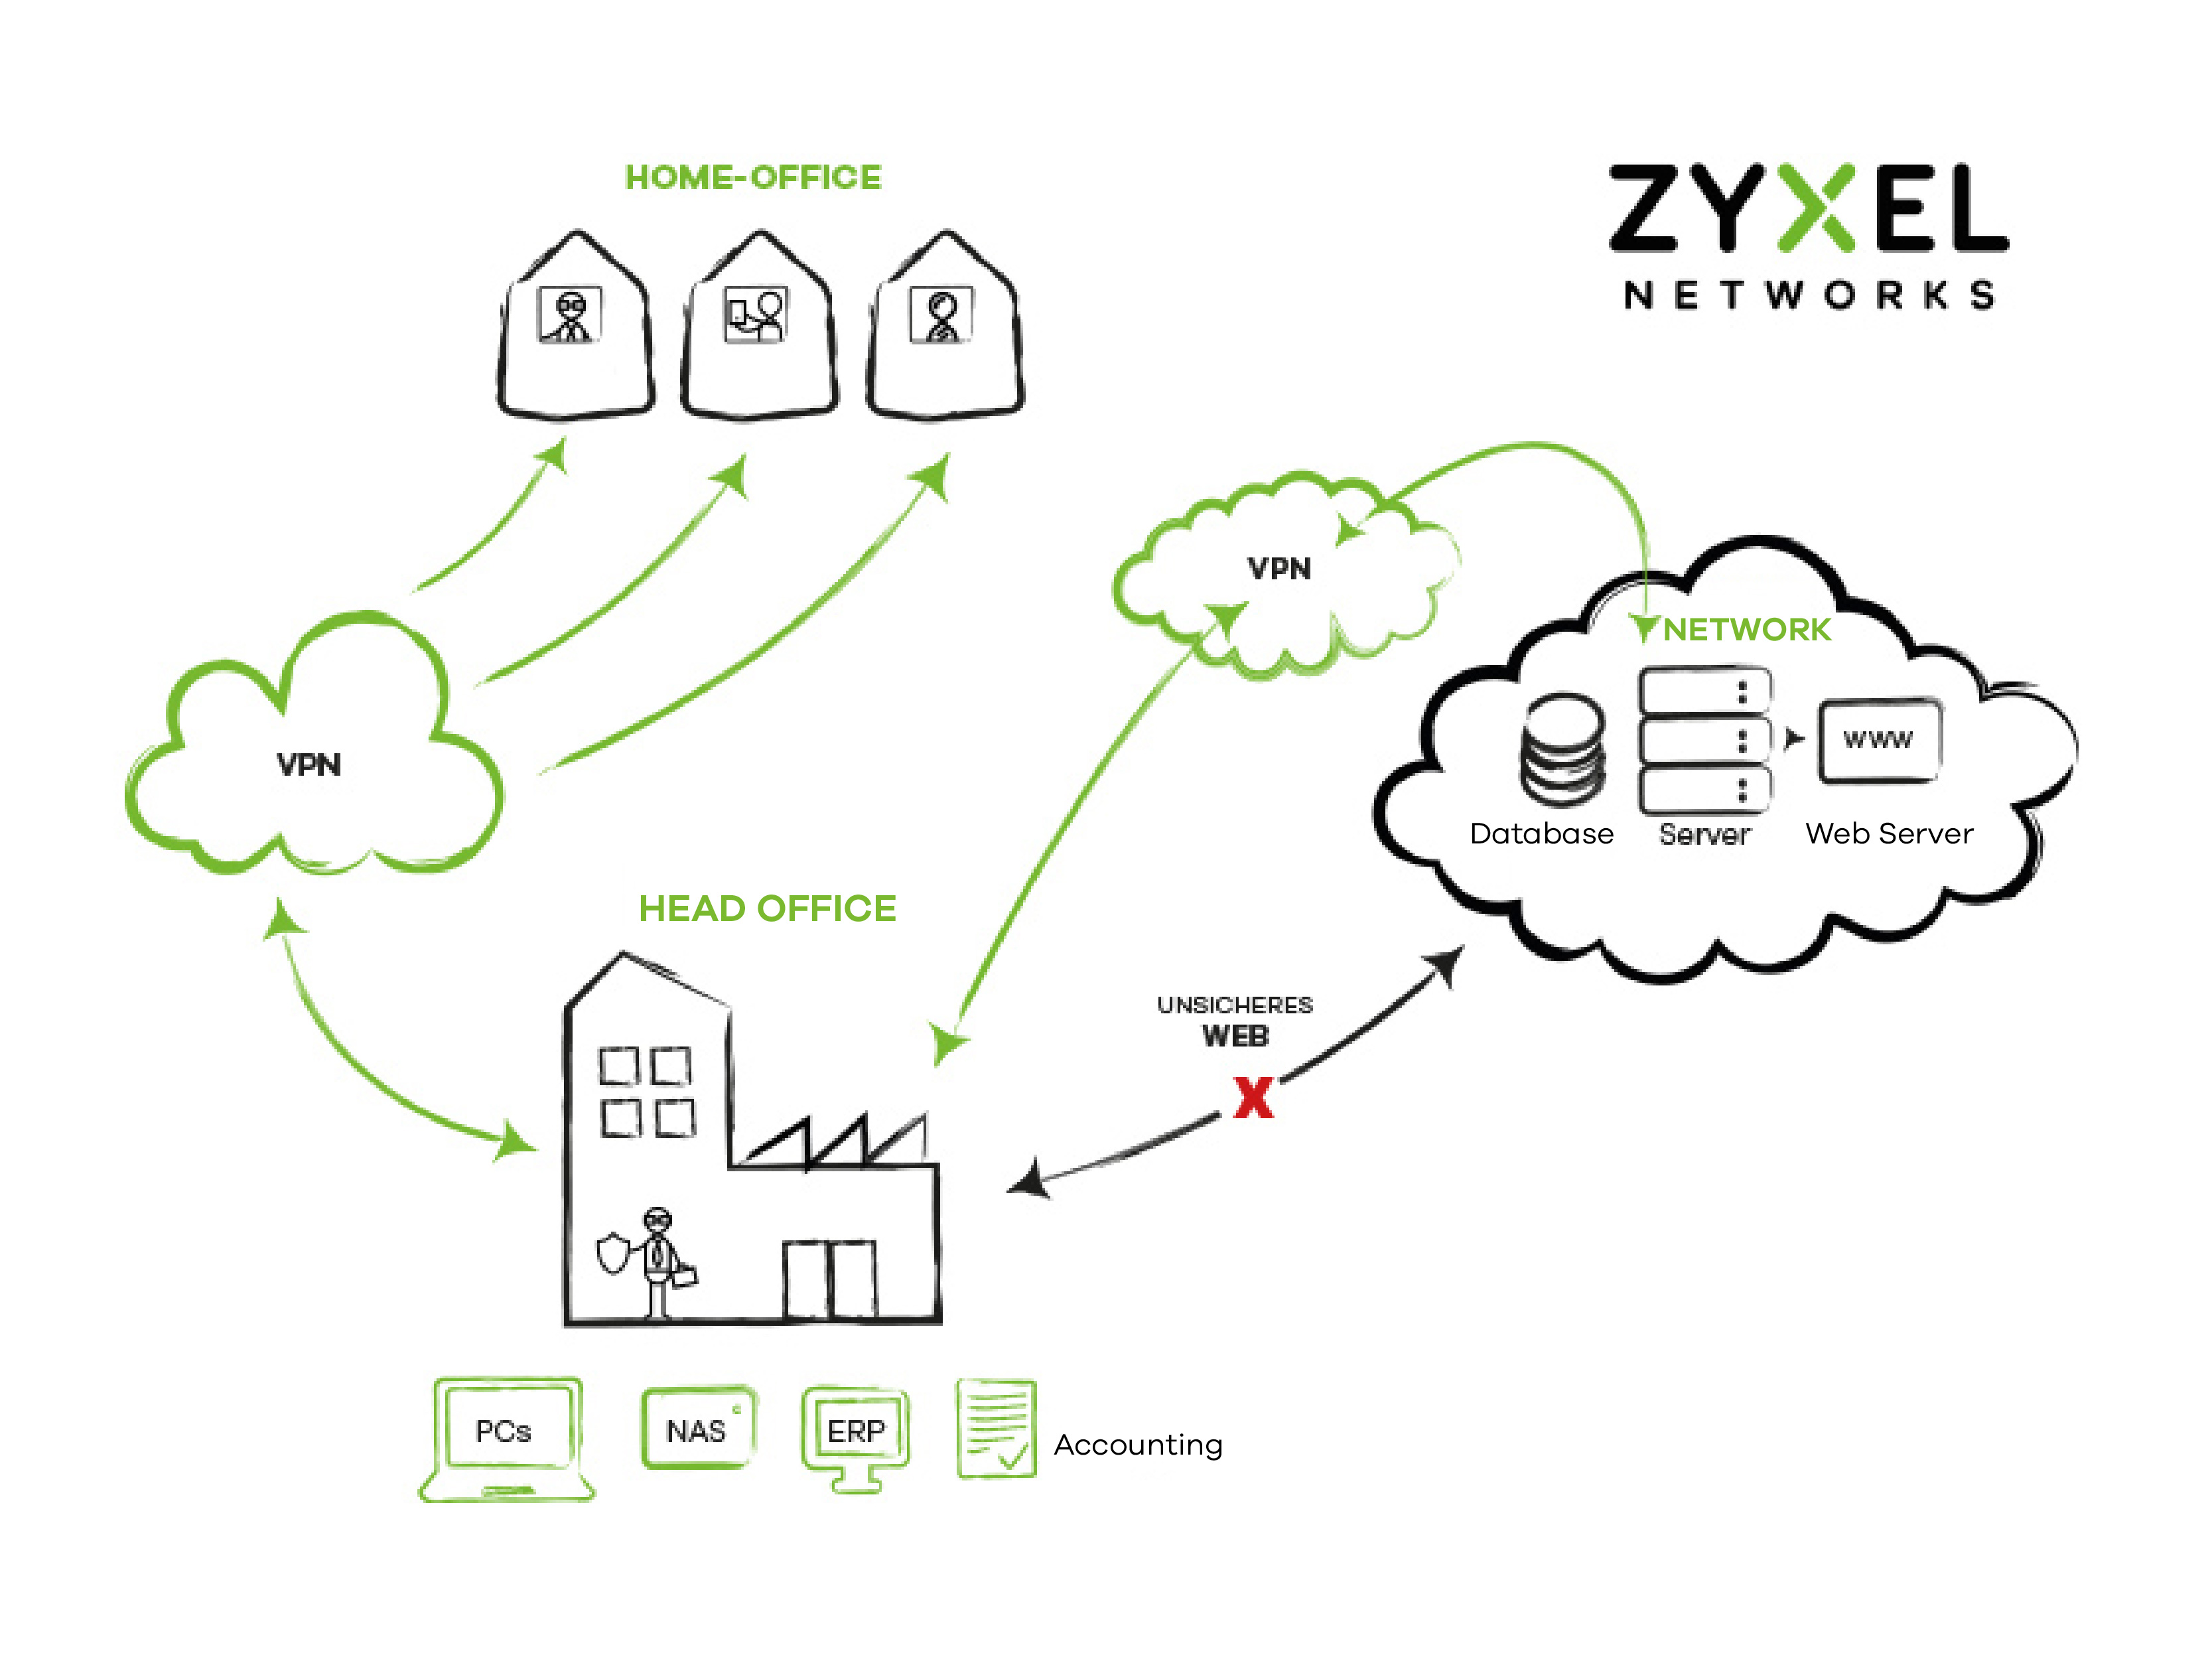 zyxel home office diagram วีพีเอ็นจากไซเซลช่วยให้พนักงานทำงานจากที่บ้านได้อย่างมีประสิทธิภาพและปลอดภัย ช่วยสร้างบ้านให้เป็นโฮมออฟฟิสขนาดย่อม เข้าถึงทรัพยากรขององค์กร ทำงานได้ต่อเนื่อง  